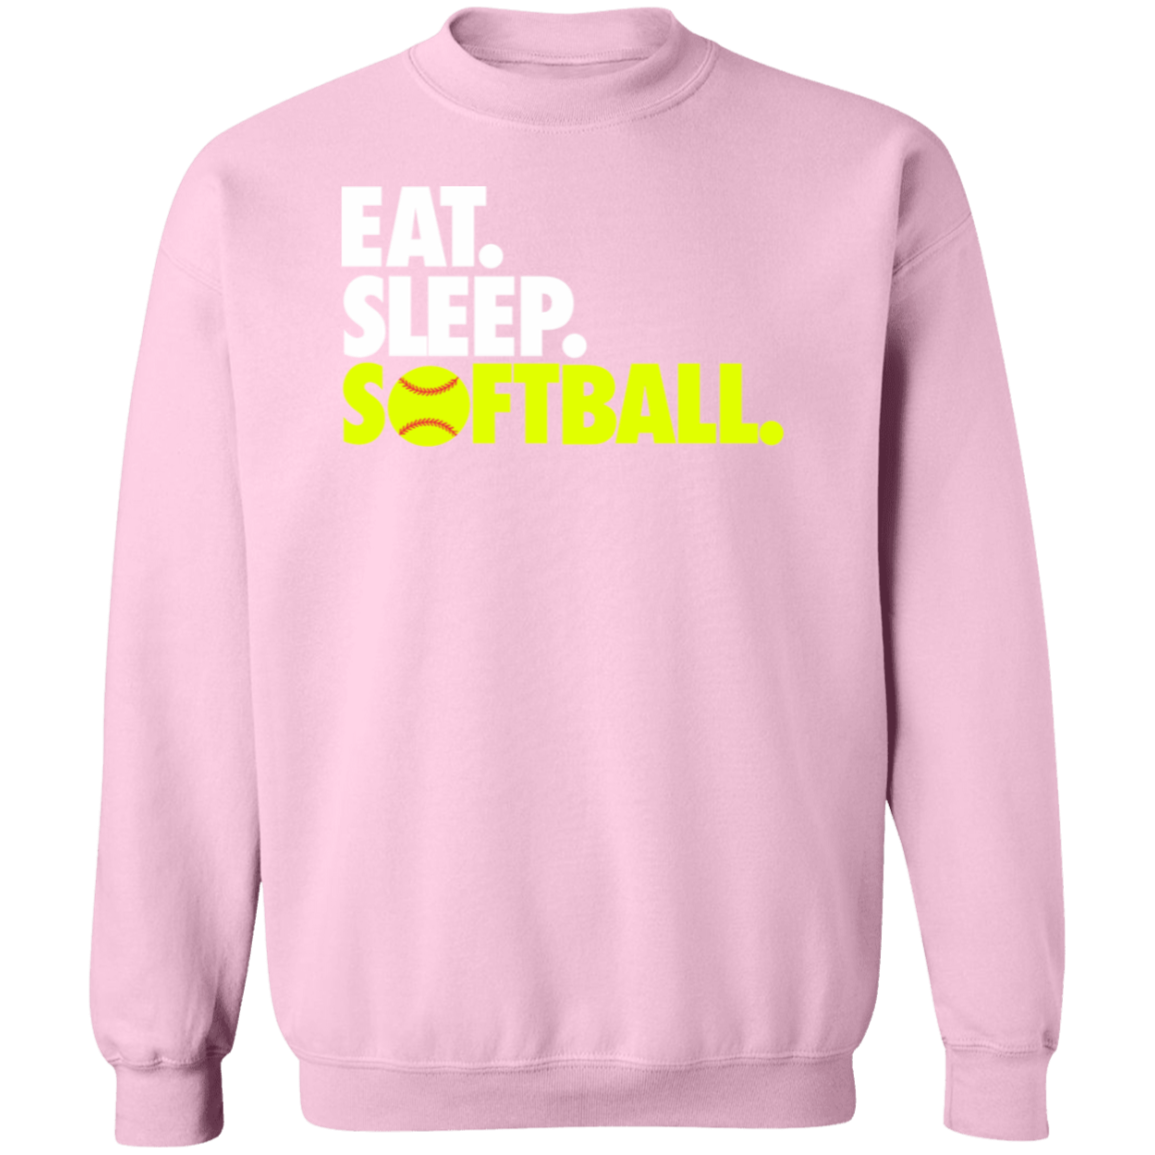 Eat Sleep Softball Premium Crew Neck Sweatshirt